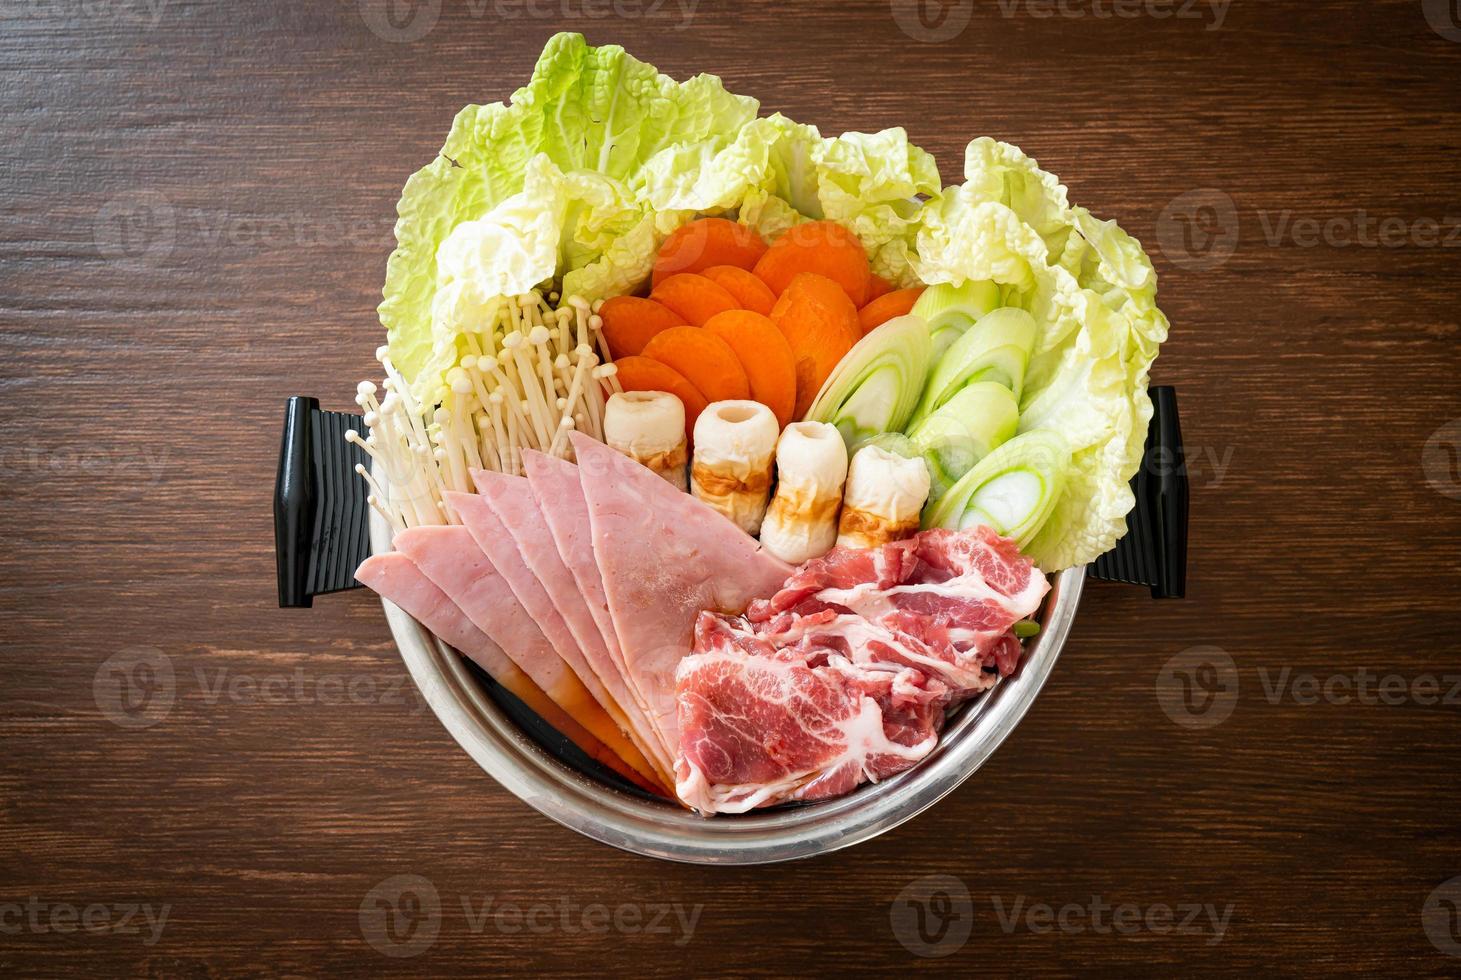 sukiyaki o shabu sopa negra de olla caliente con carne cruda y verdura foto